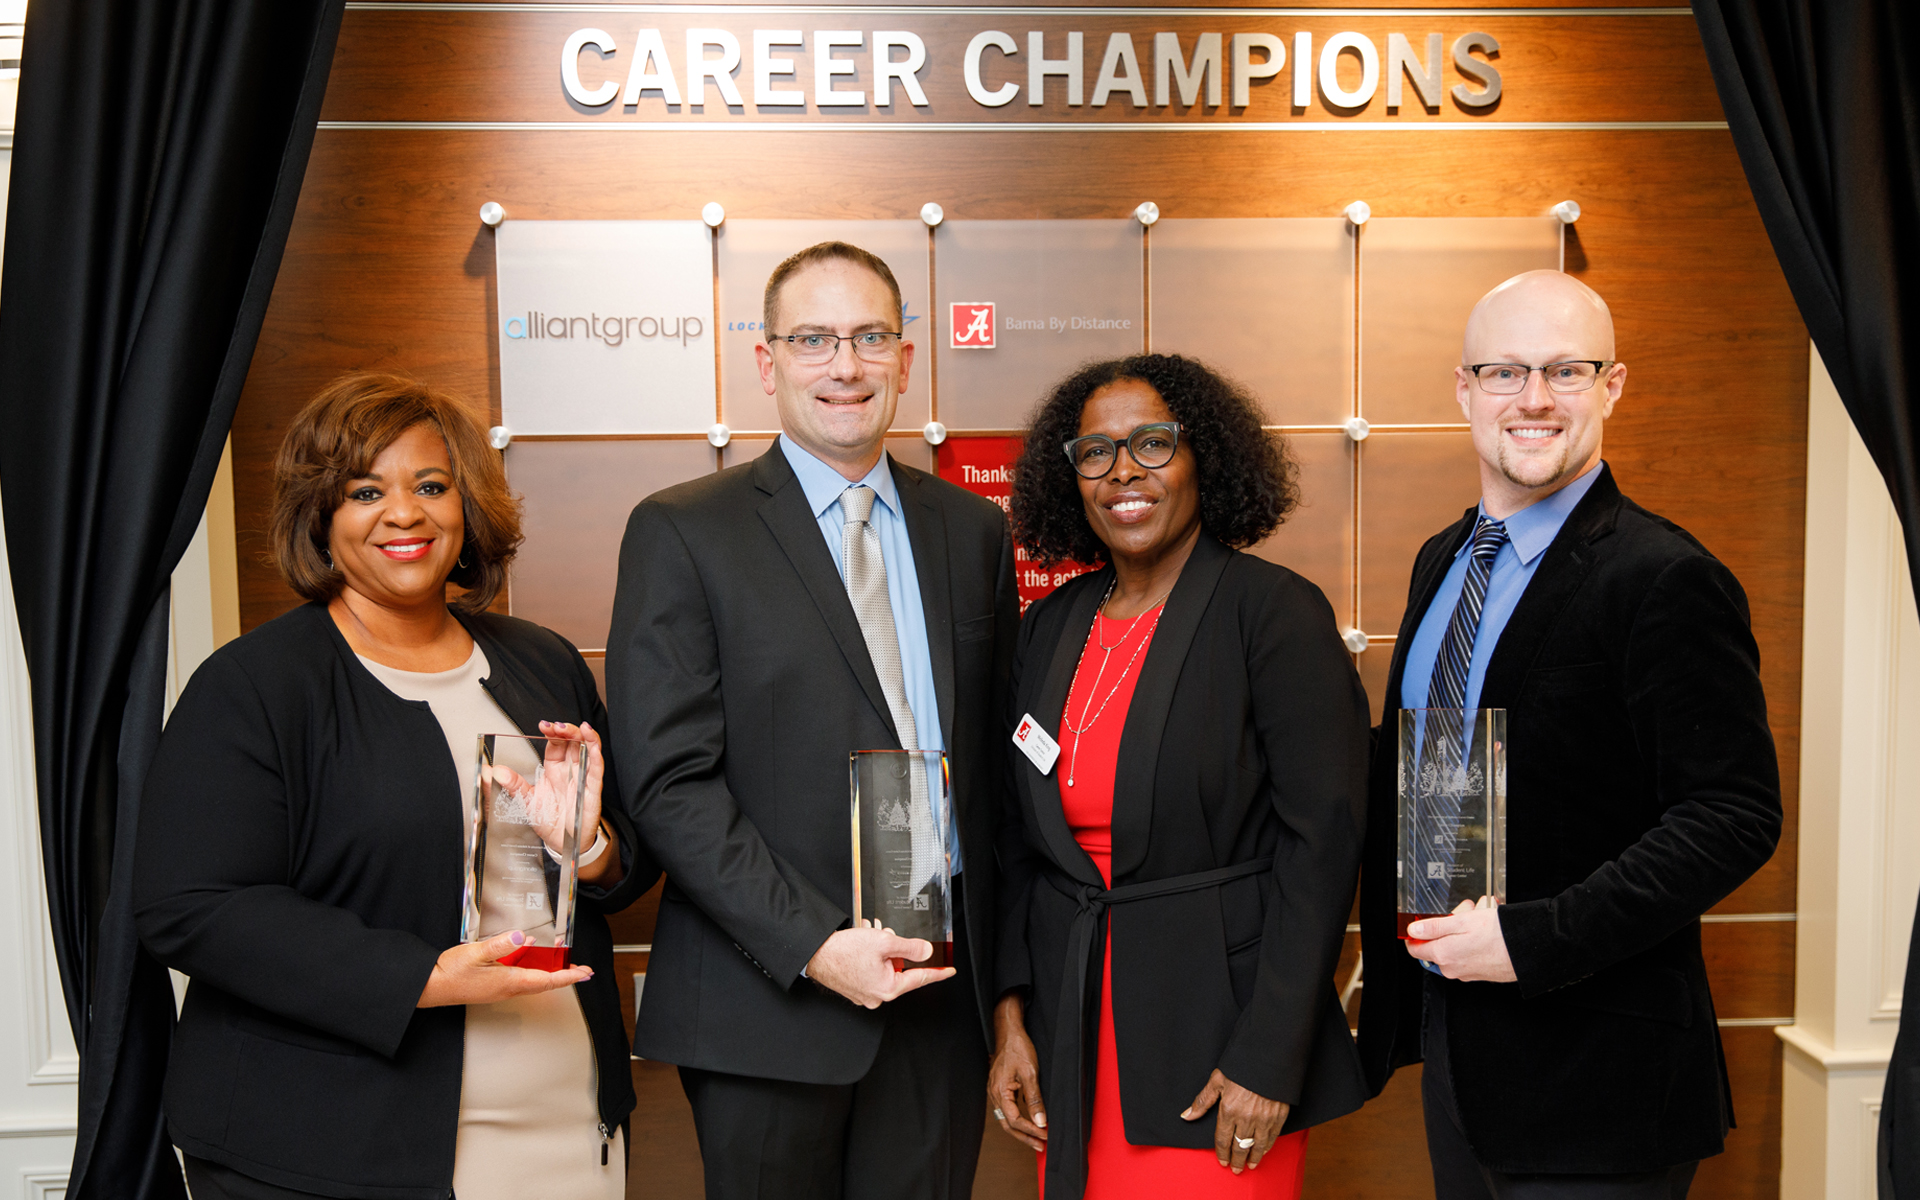 UA Career Center Unveils First Career Champion Sponsors